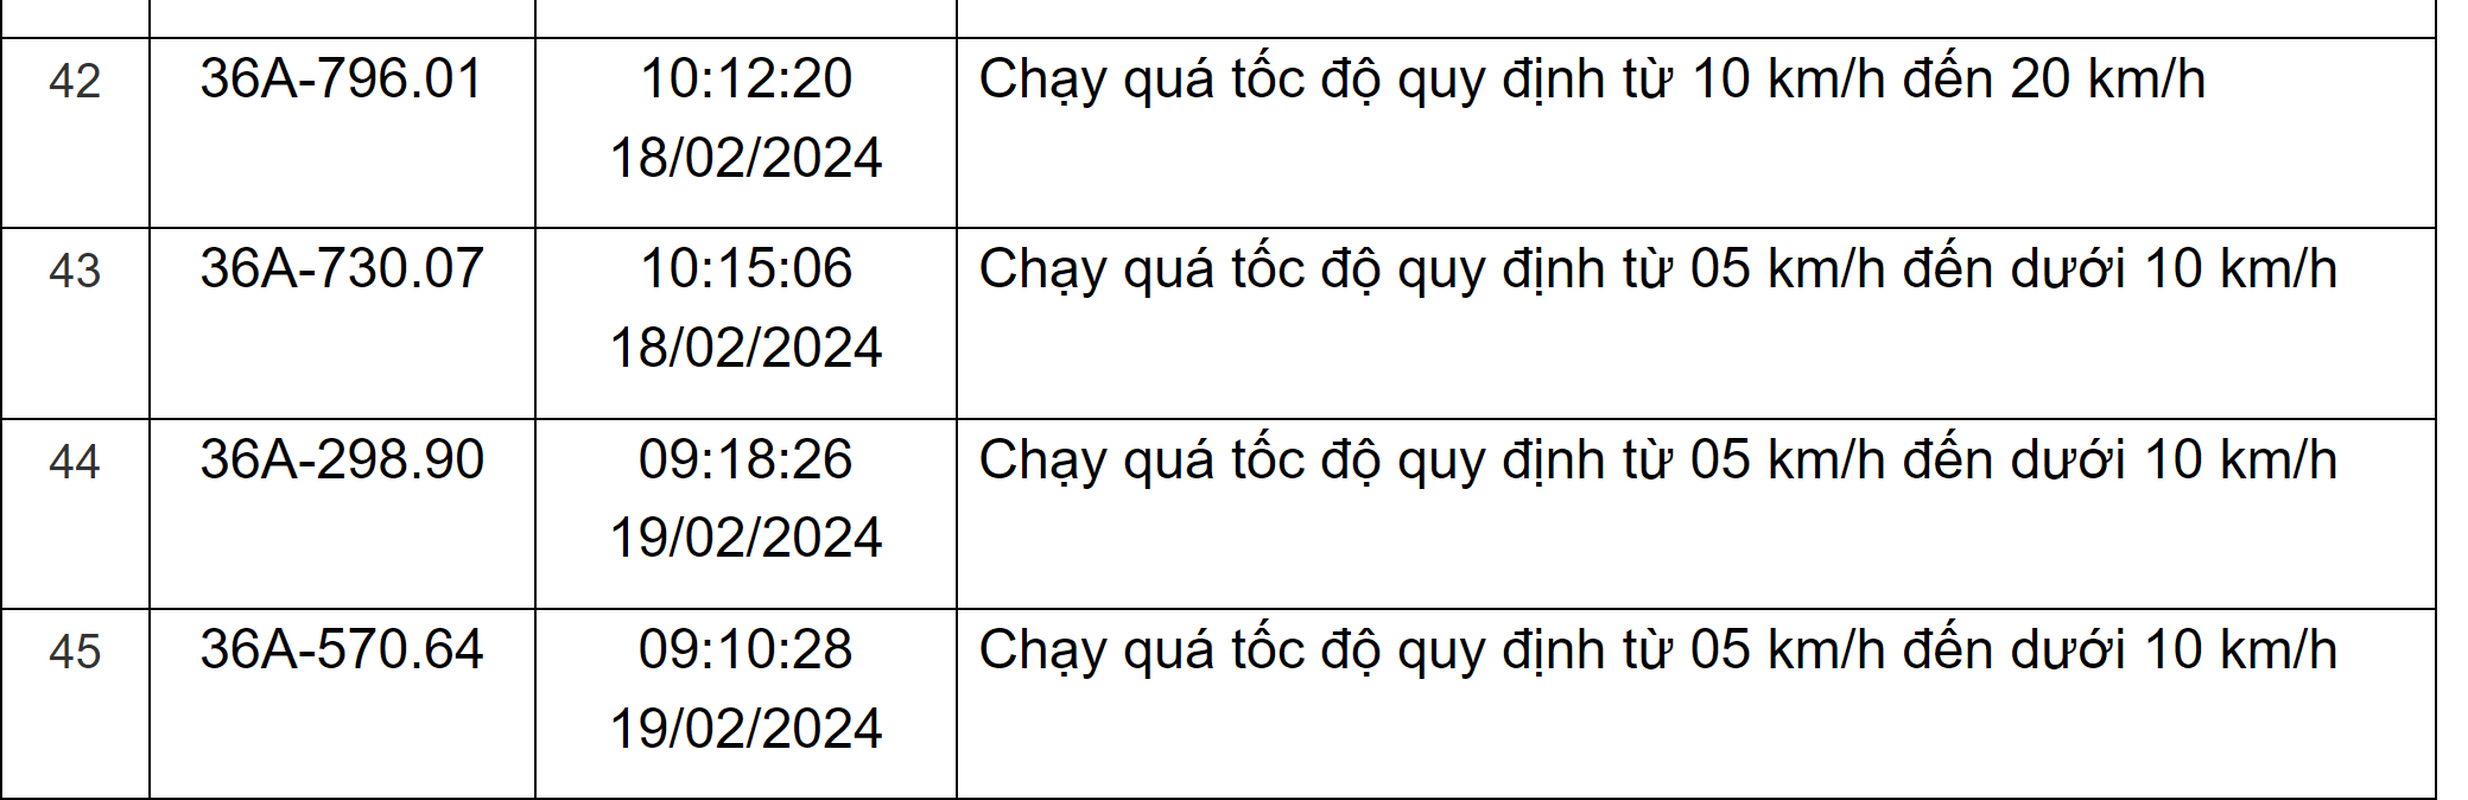 Danh sach phuong tien vi pham toc do bi “phat nguoi” o Thanh Hoa-Hinh-15